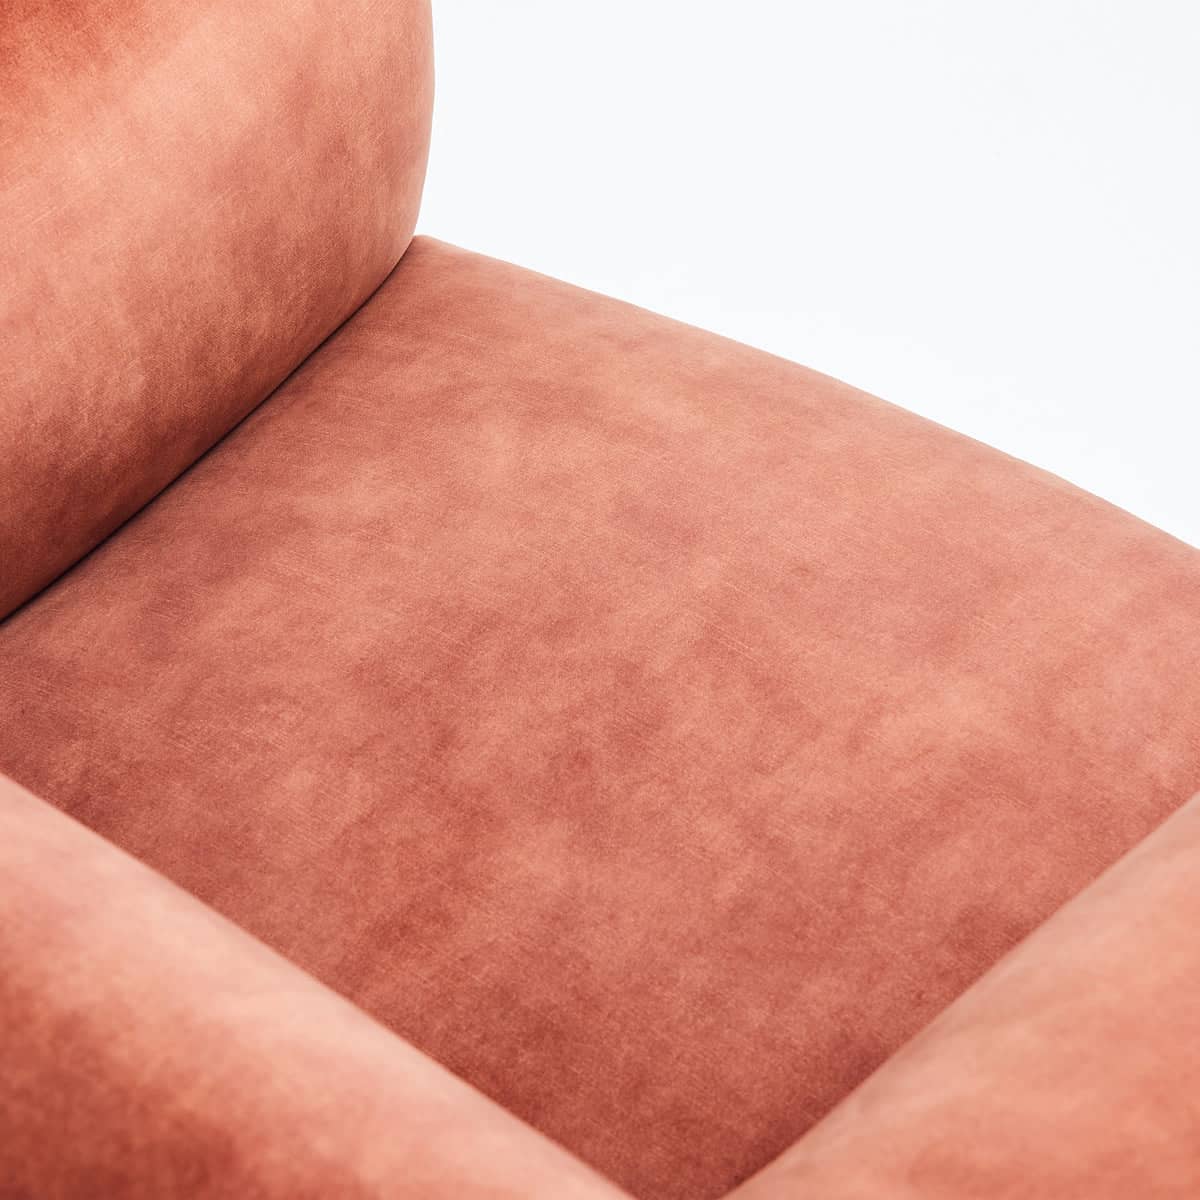 Tulip Lounge Chair - Decent Cinnamon